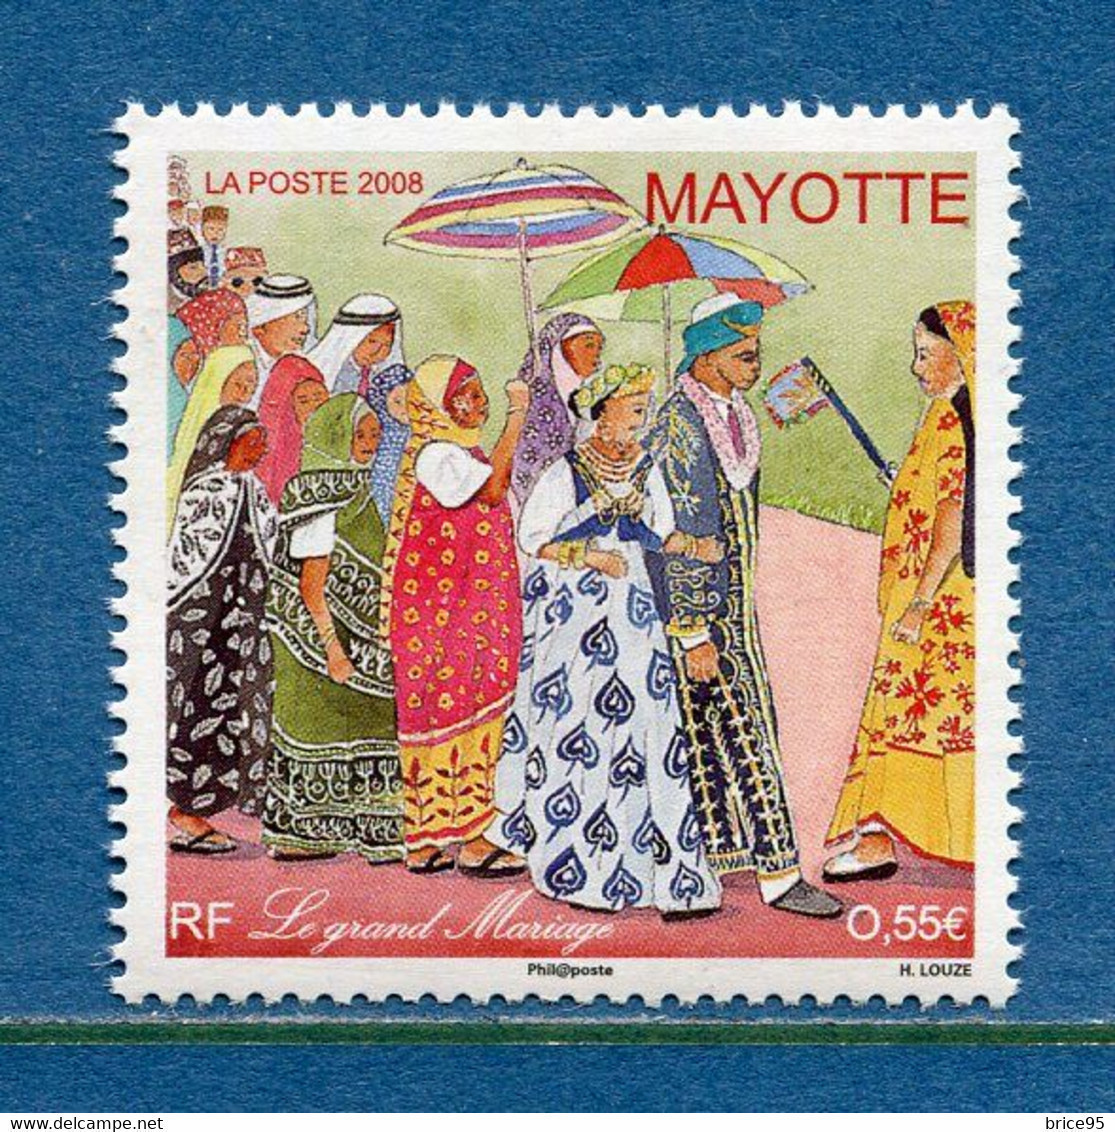 Mayotte - YT N° 215 ** - Neuf Sans Charnière - 2008 - Ongebruikt